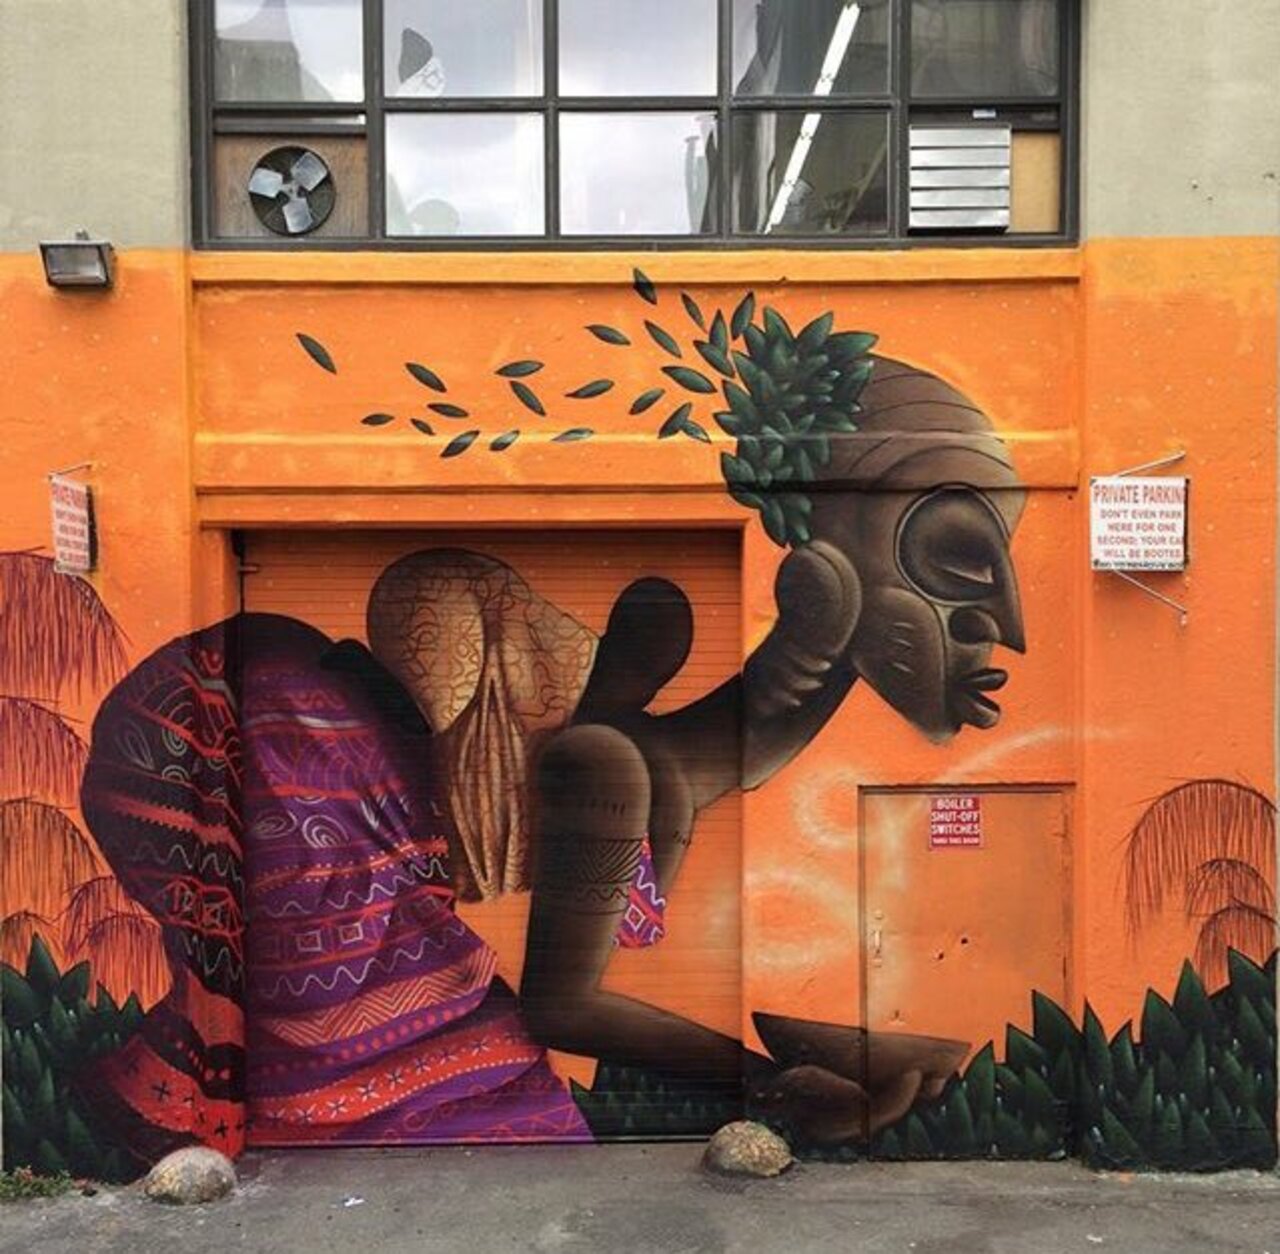 New Street Art by Alexandre Keto in NYC 

#art #graffiti #mural #streetart https://t.co/LE9PQiwHhT